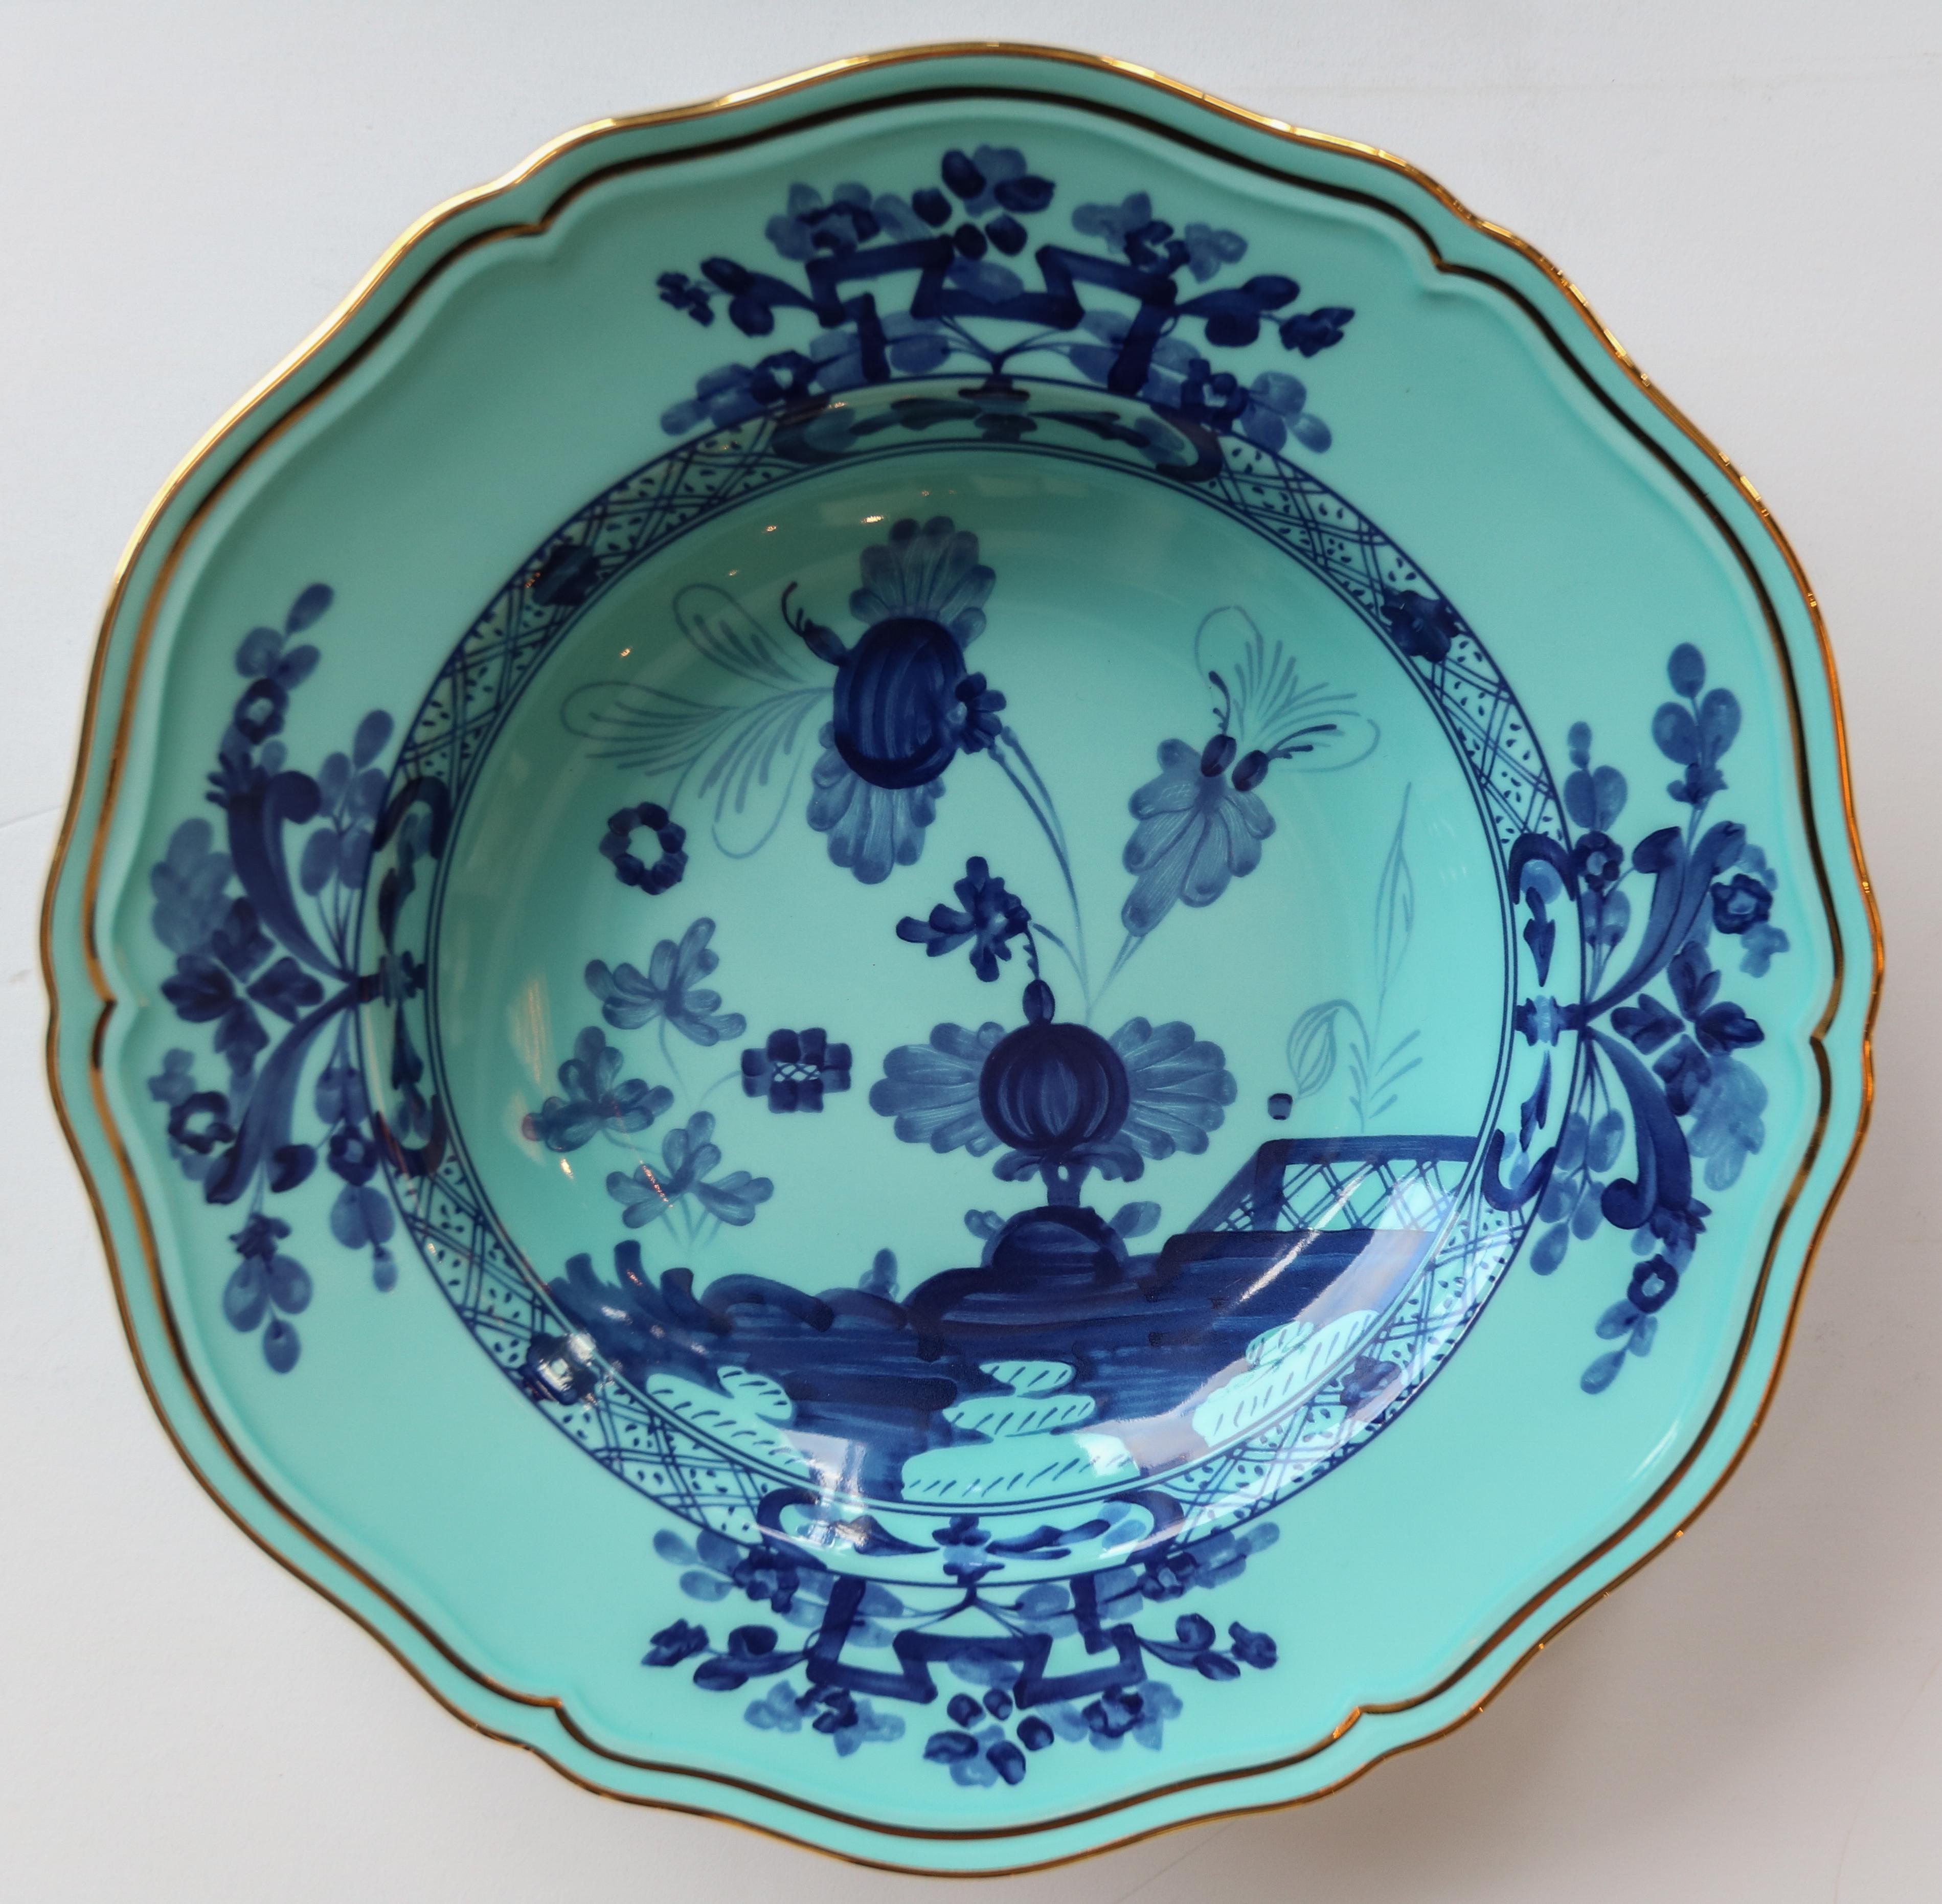 Richard Ginori Oriente Italiano iris blue soup plate in the Antico Doccia shape 24cm in diameter.
  